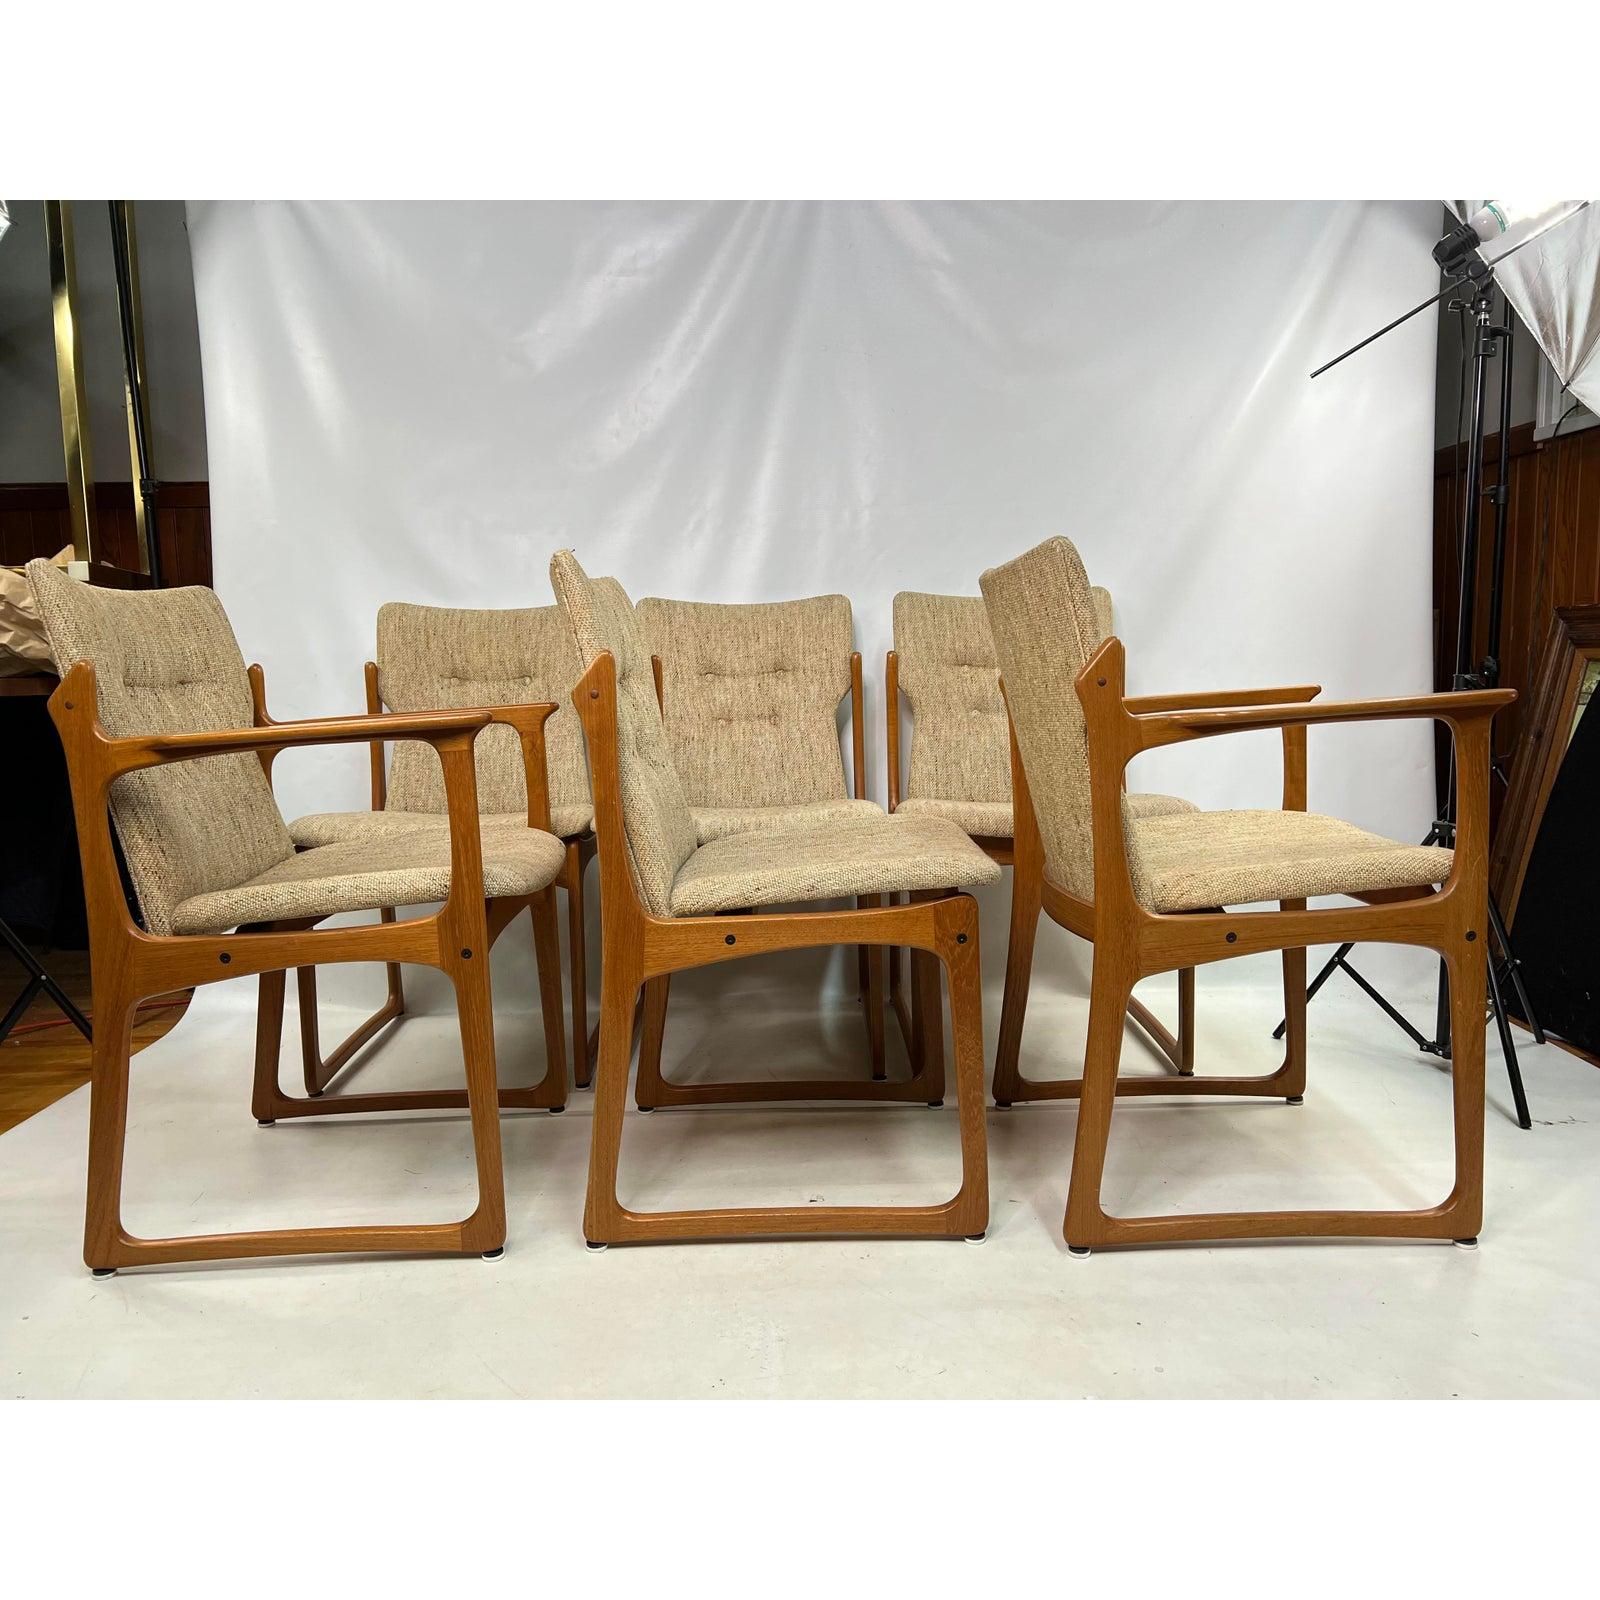 Mid-Century Modern Vamdrup Stolefabrik teak dining chairs.